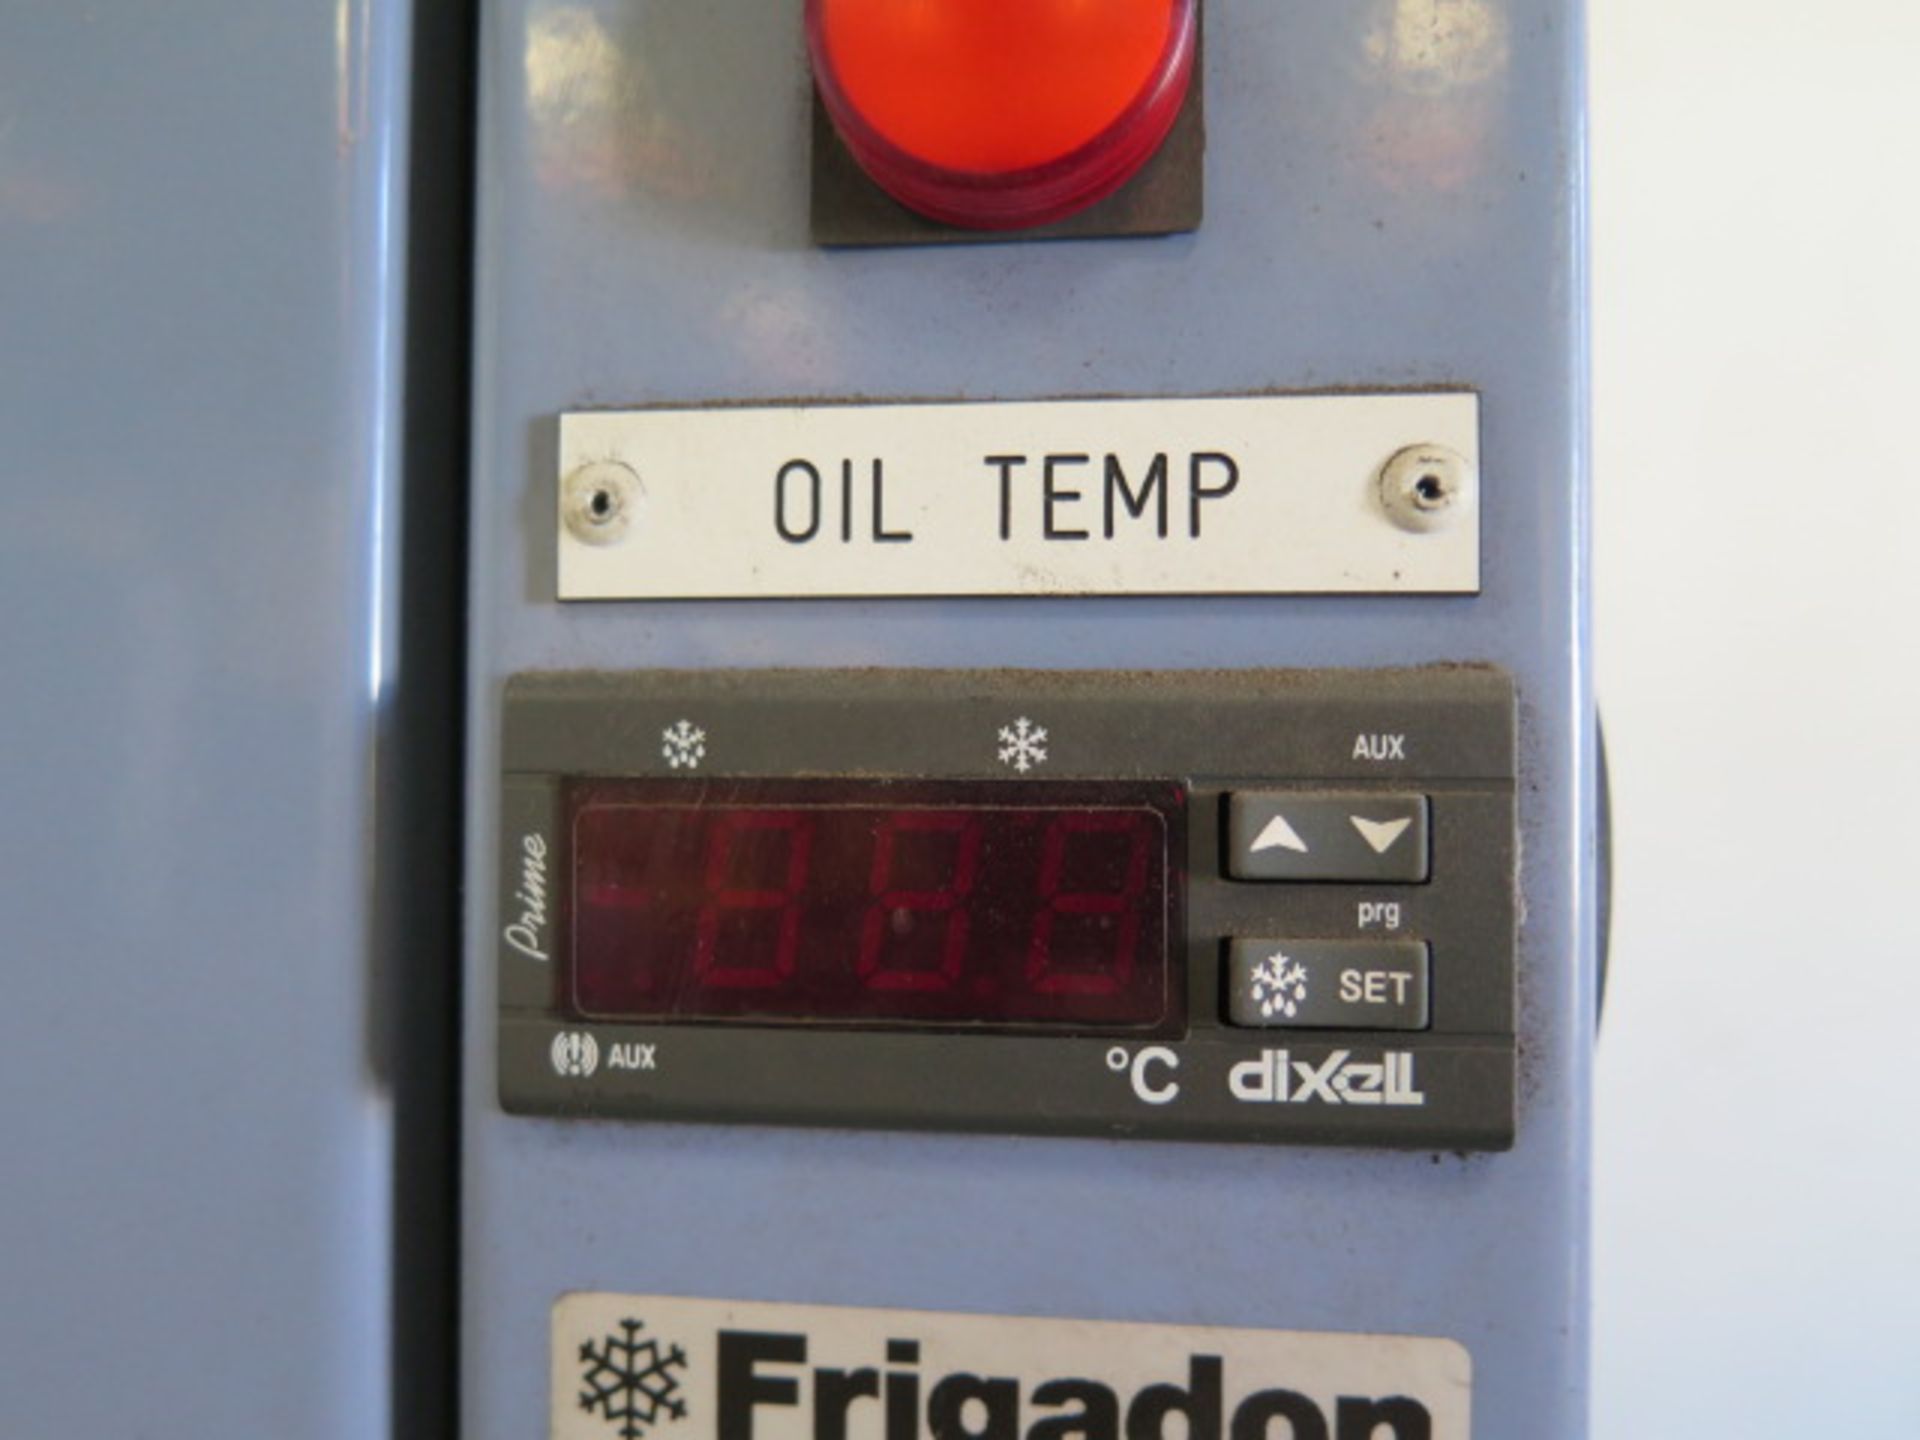 2007 Frigadon mdl. FWC-110-TRE Transor Coolant Filtration System s/n 07243391 w/ R-404A Refrigerant - Image 11 of 12